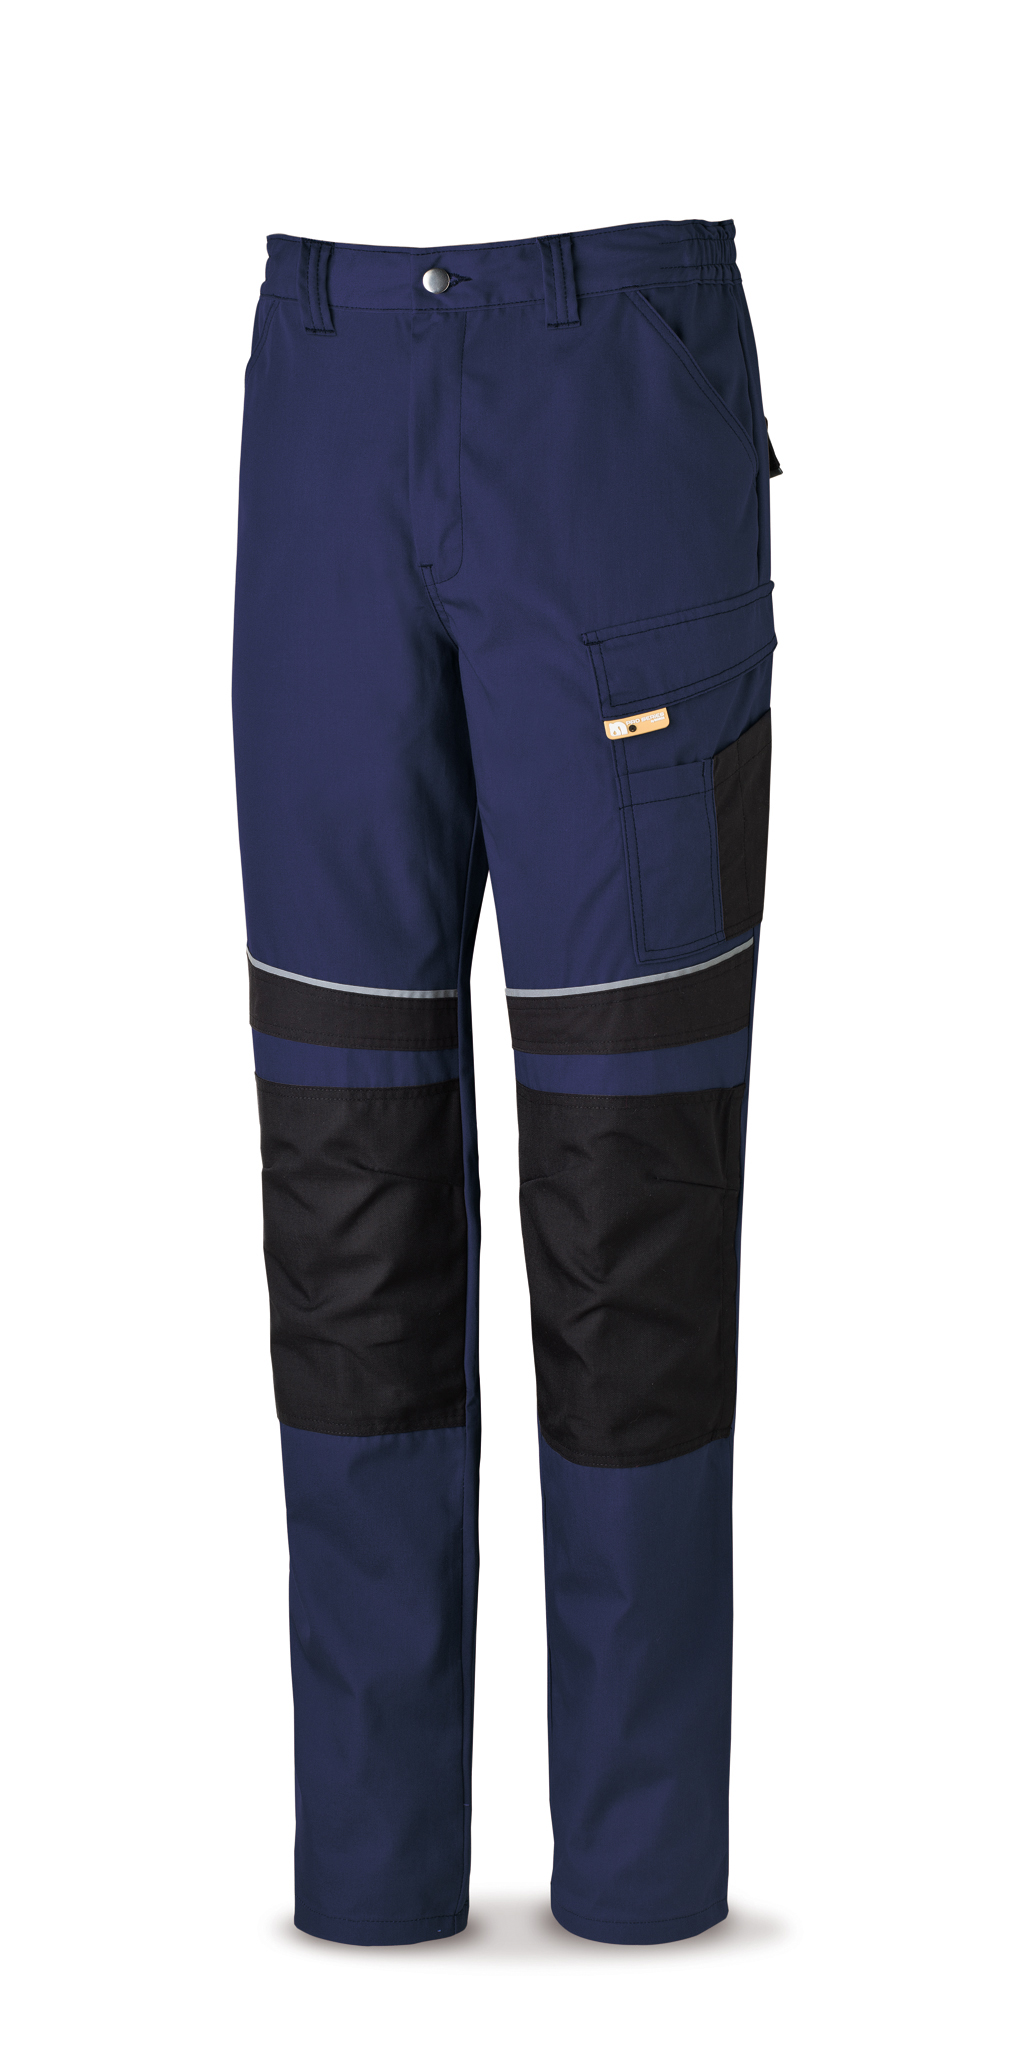 588-PANE Vestuario Laboral Pro Series Pantalón CANVAS azul marino/negro poliéster/algodón 245 g. Multibolsillos